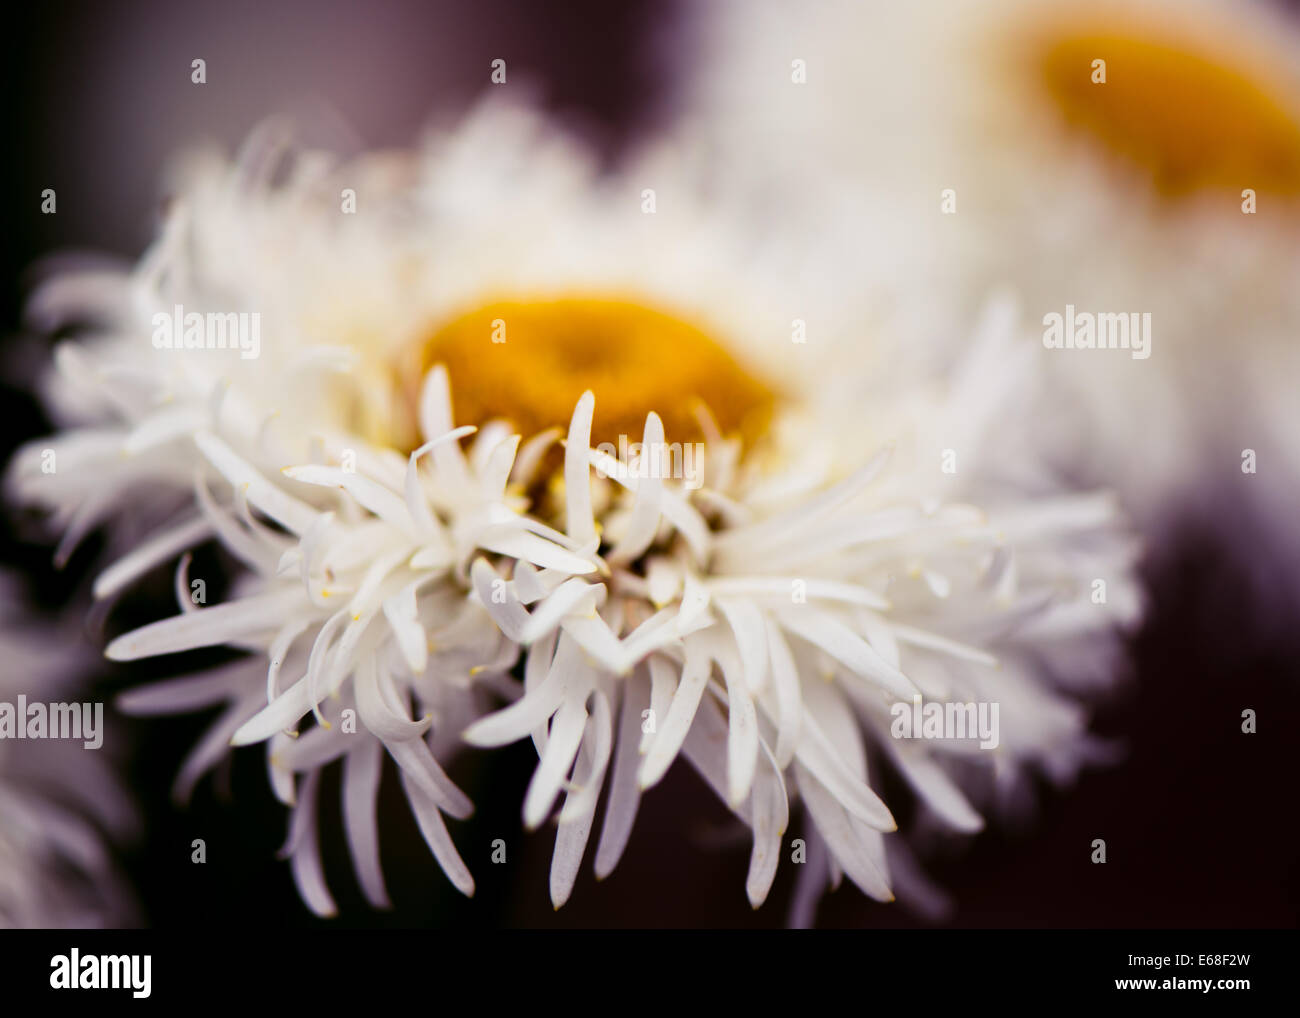 Leucanthemum × superbum Phyllis Smith Shasta daisy white daisy with ragged petals and yoke yellow center Stock Photo